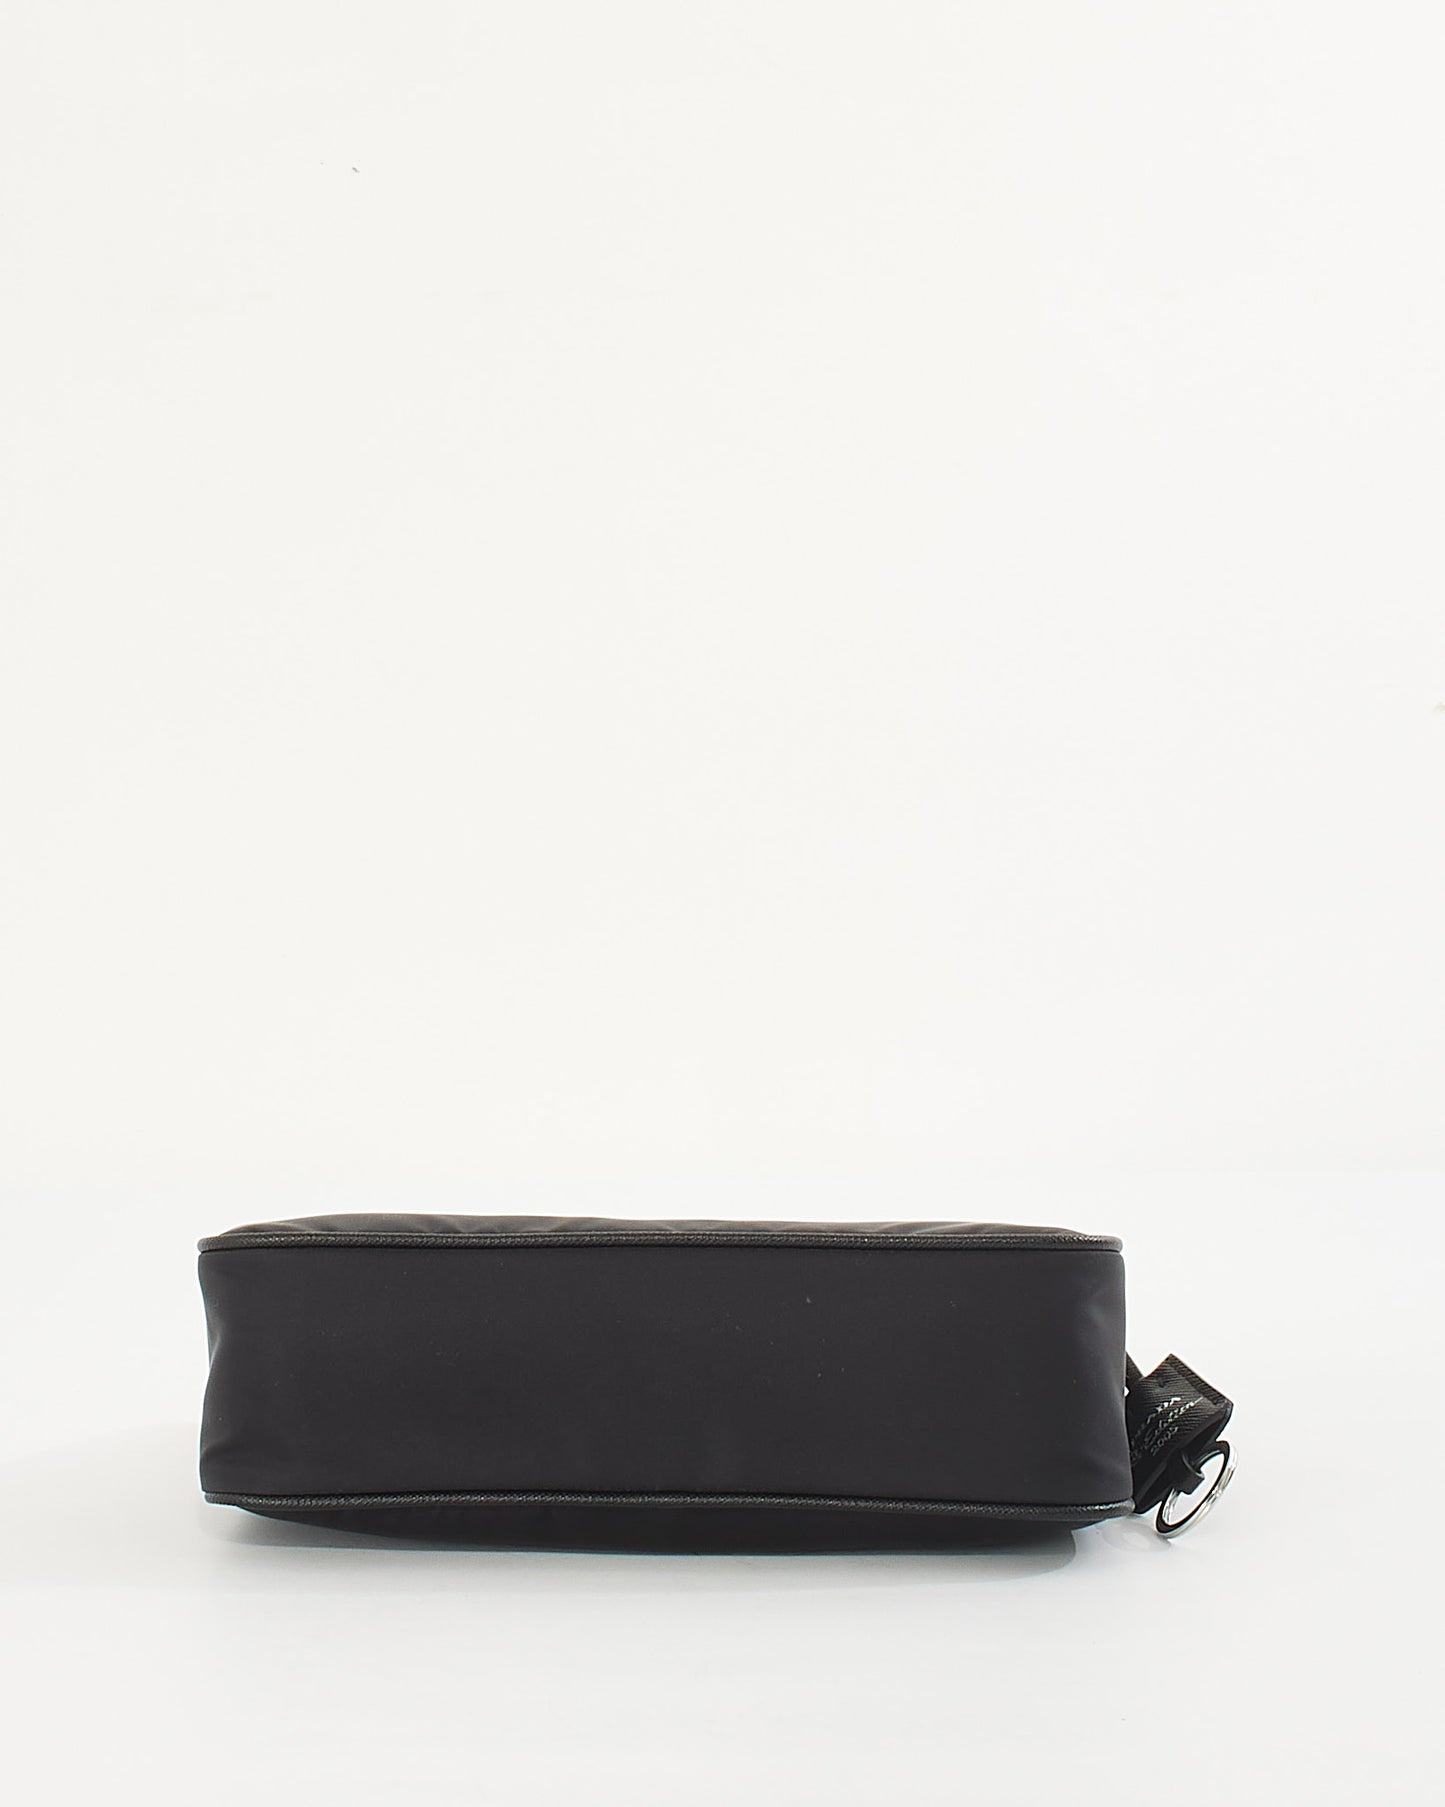 Mini sac Prada en nylon noir réédition 2005